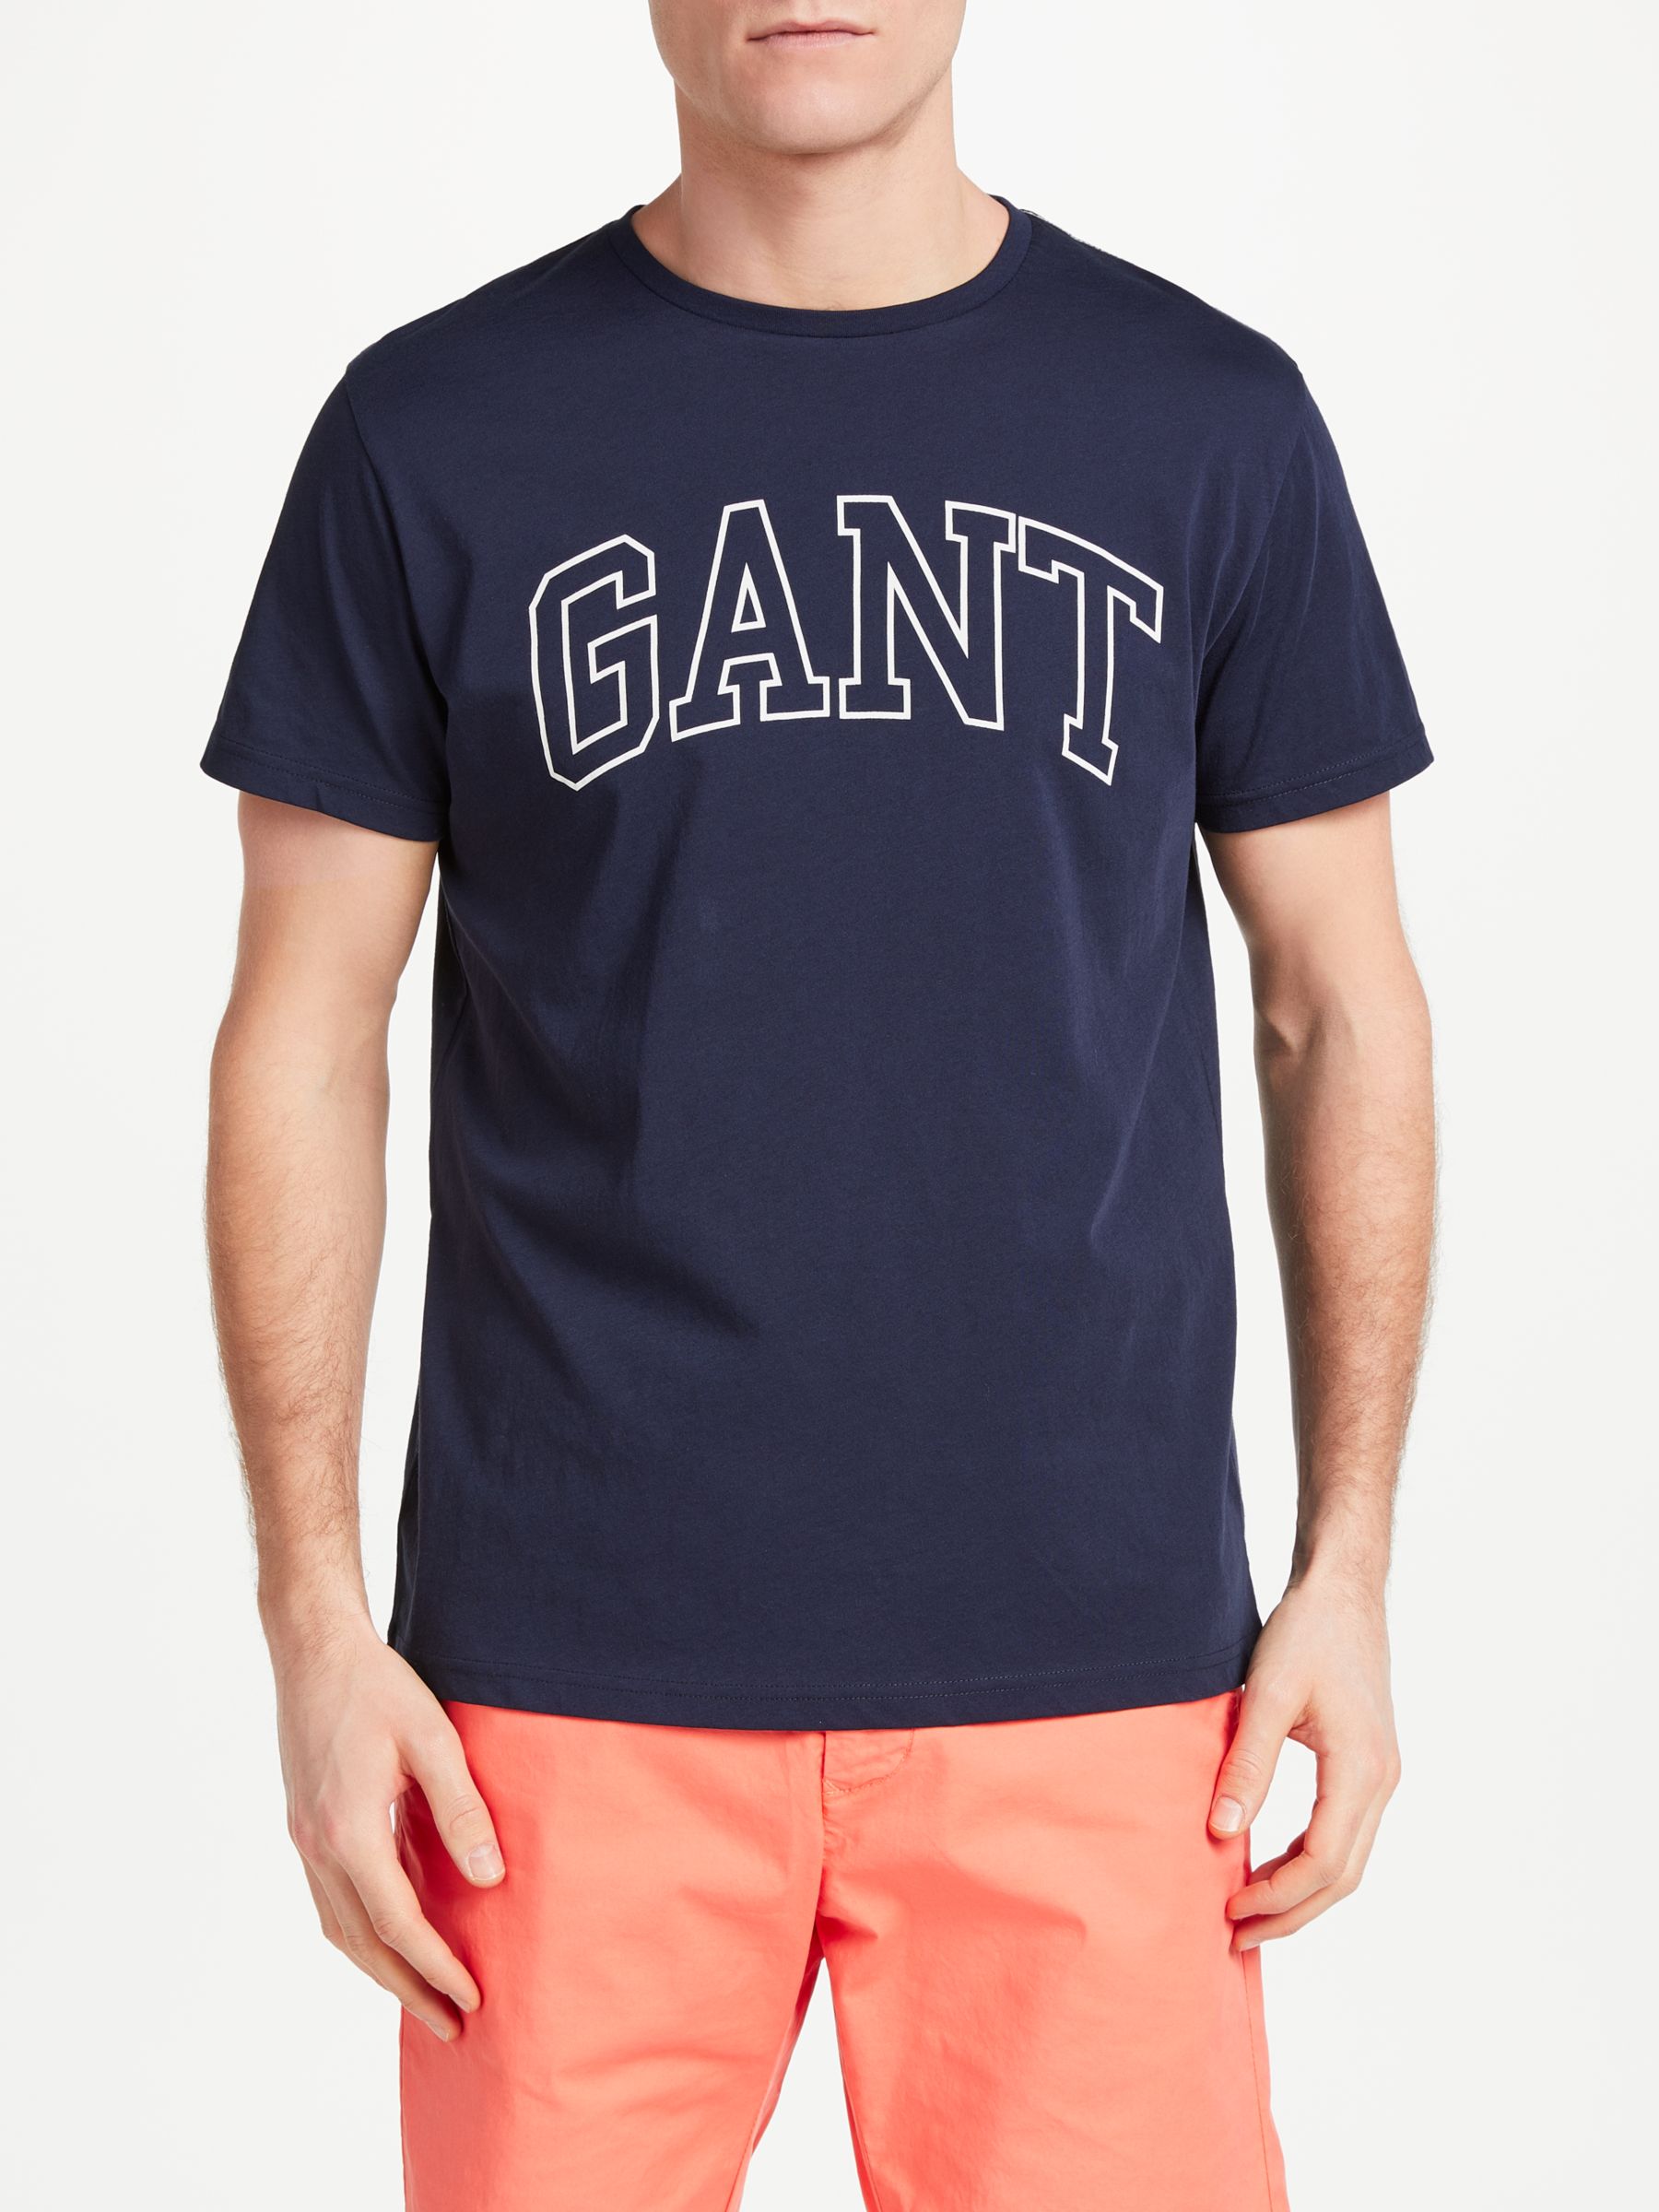 Gant Outline Print Cotton T-Shirt, Navy, XXL